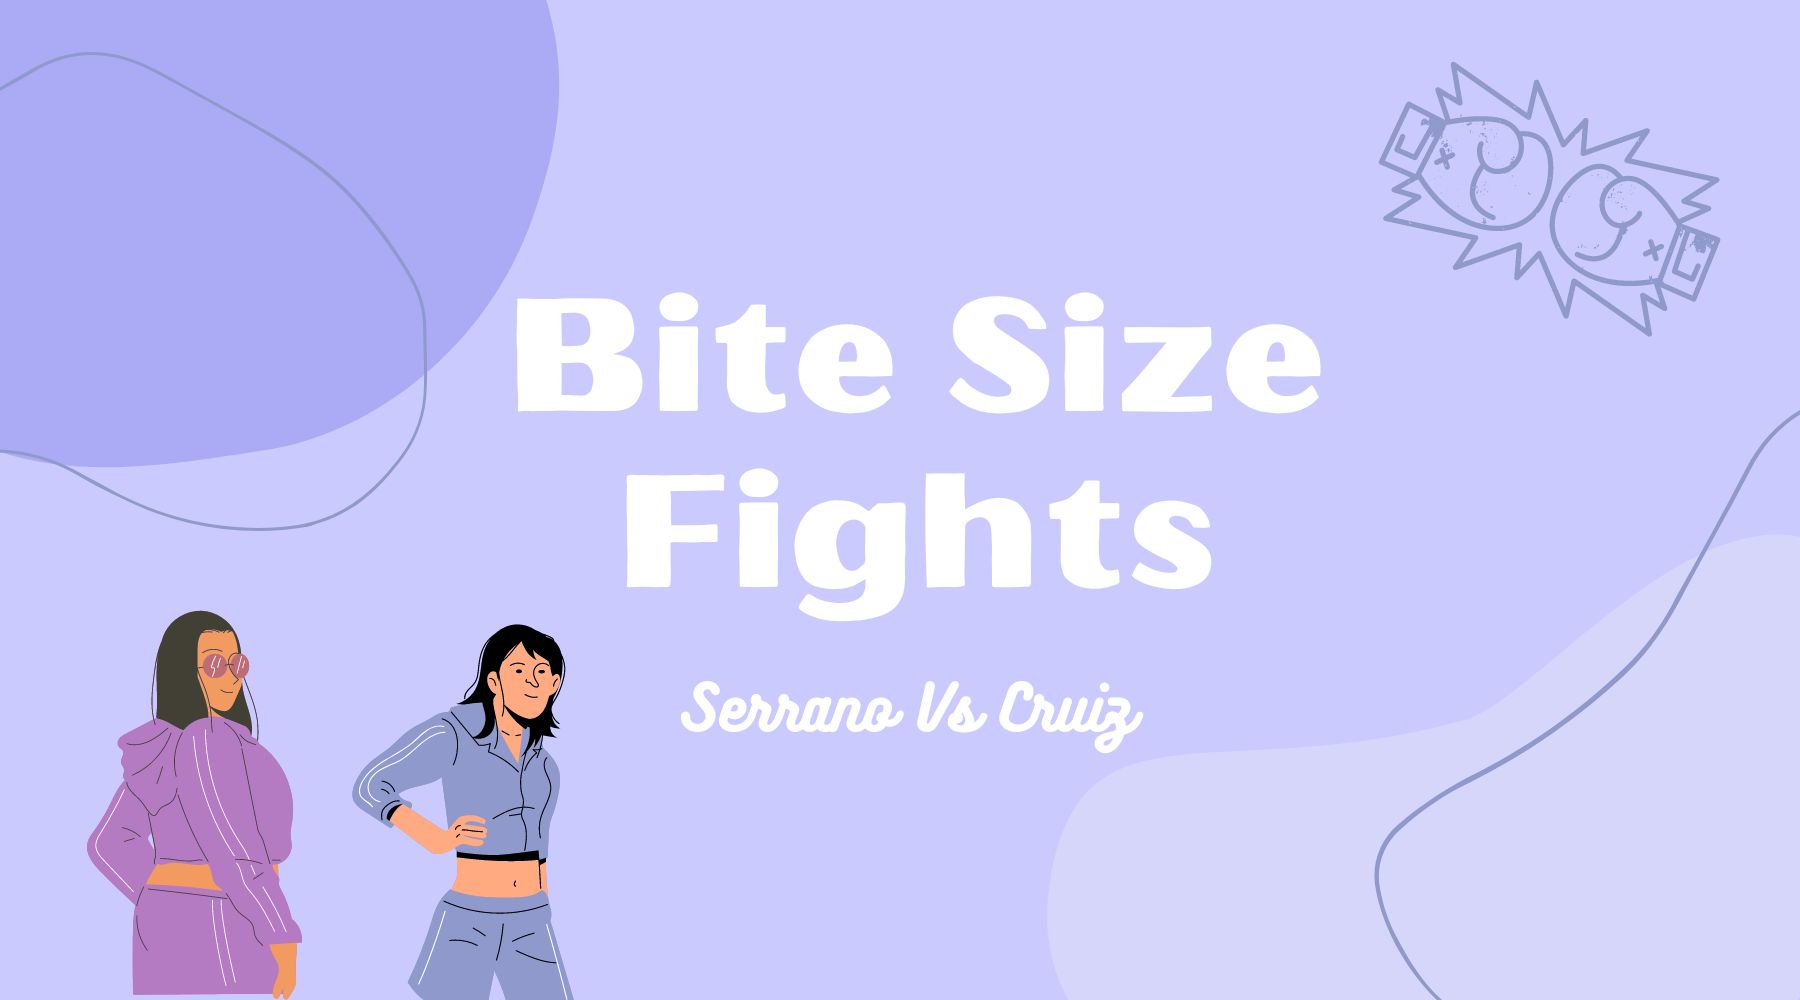 Serrano Vs Cruiz - Bite Size fights